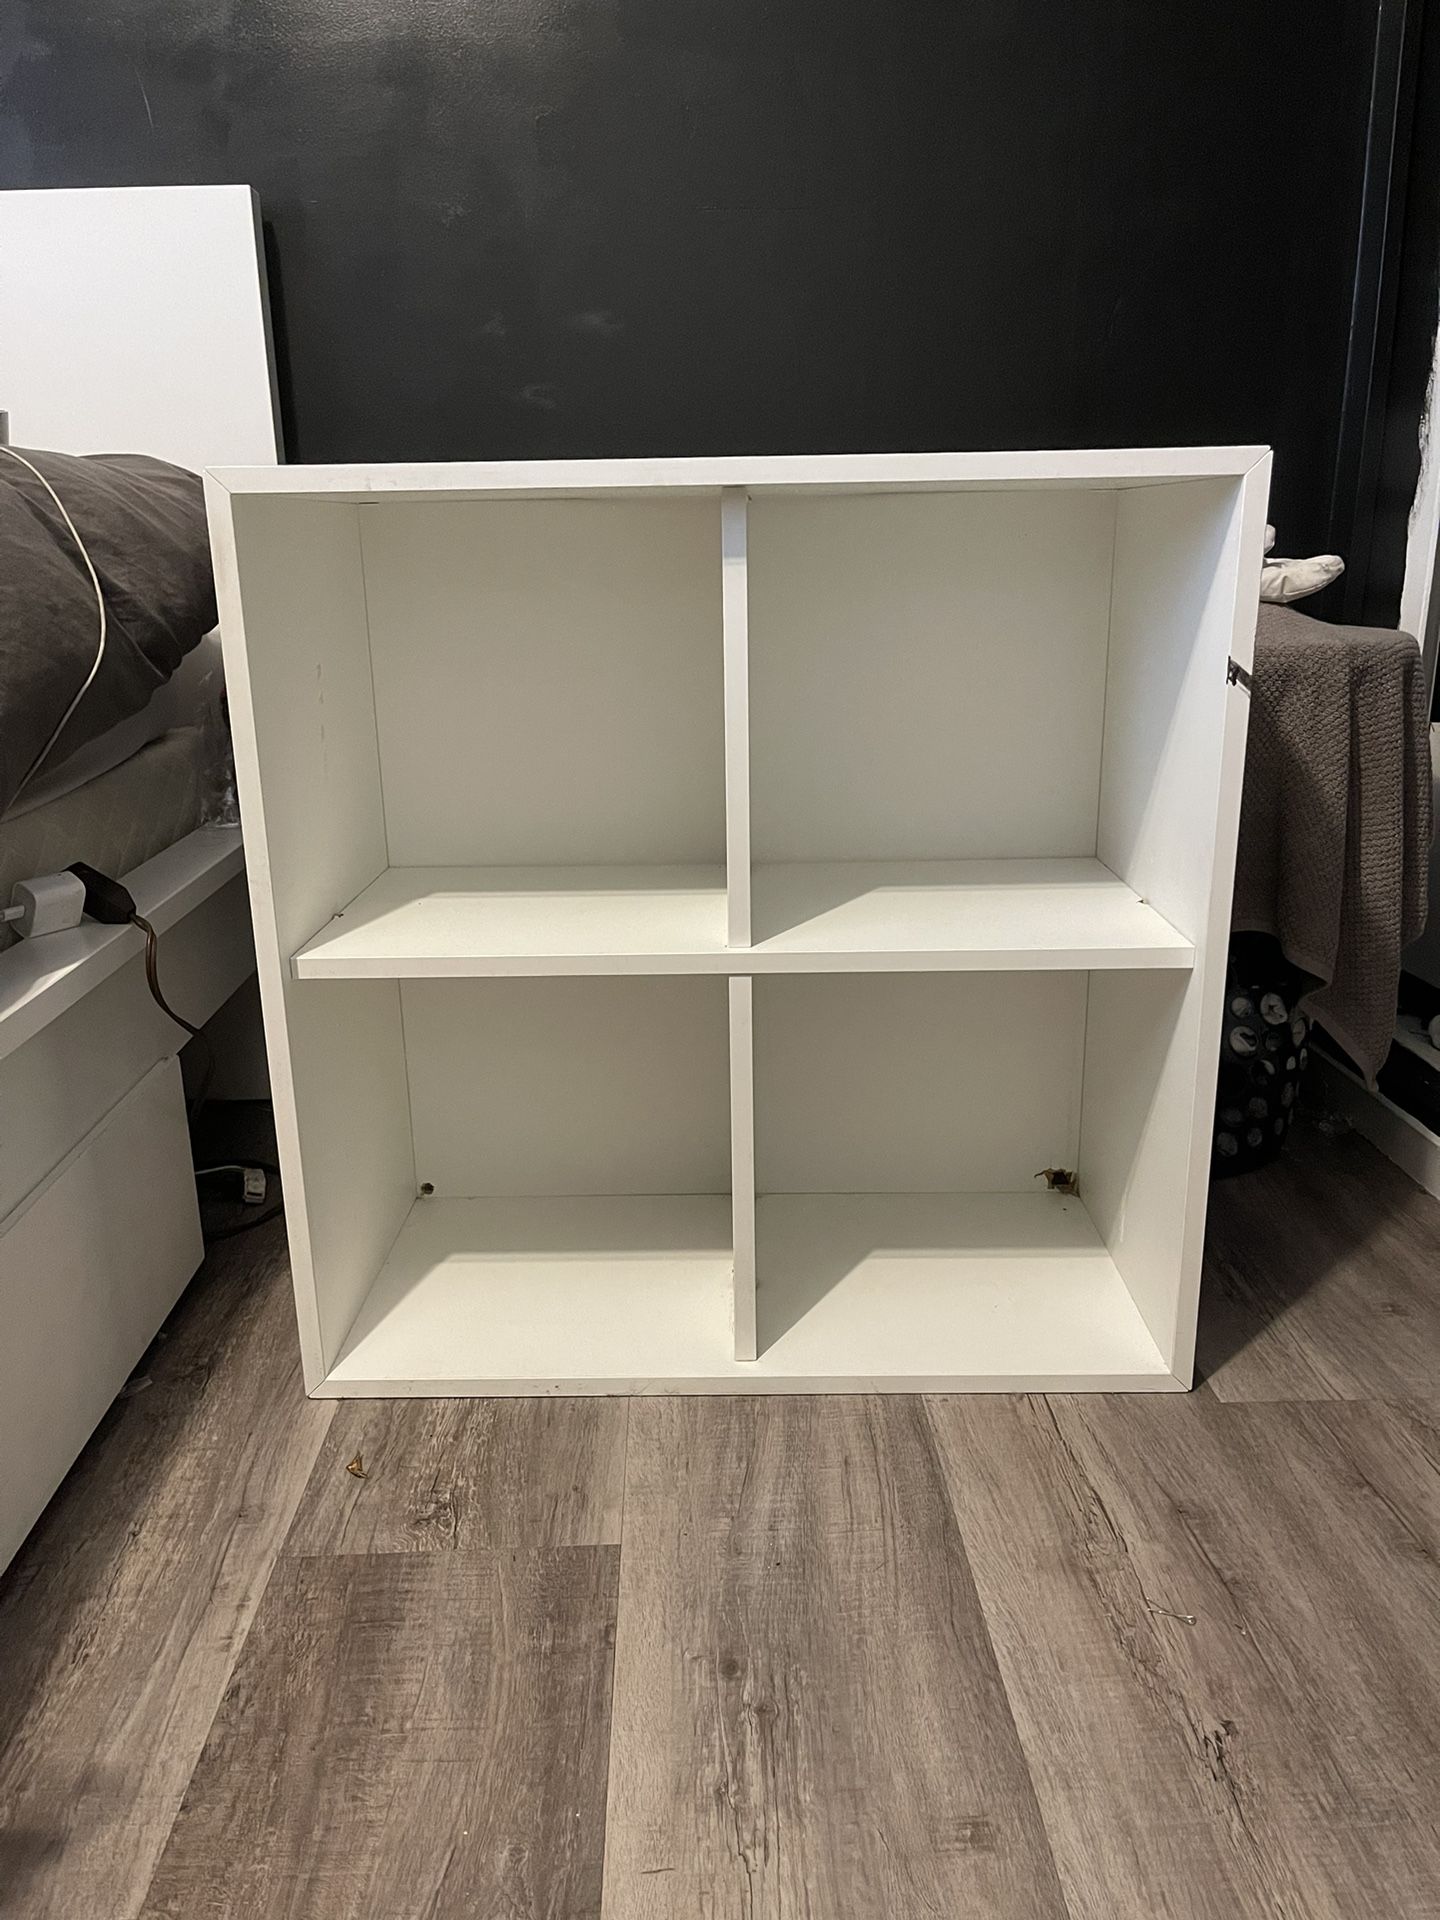 Ikea 4 cube organizer desk